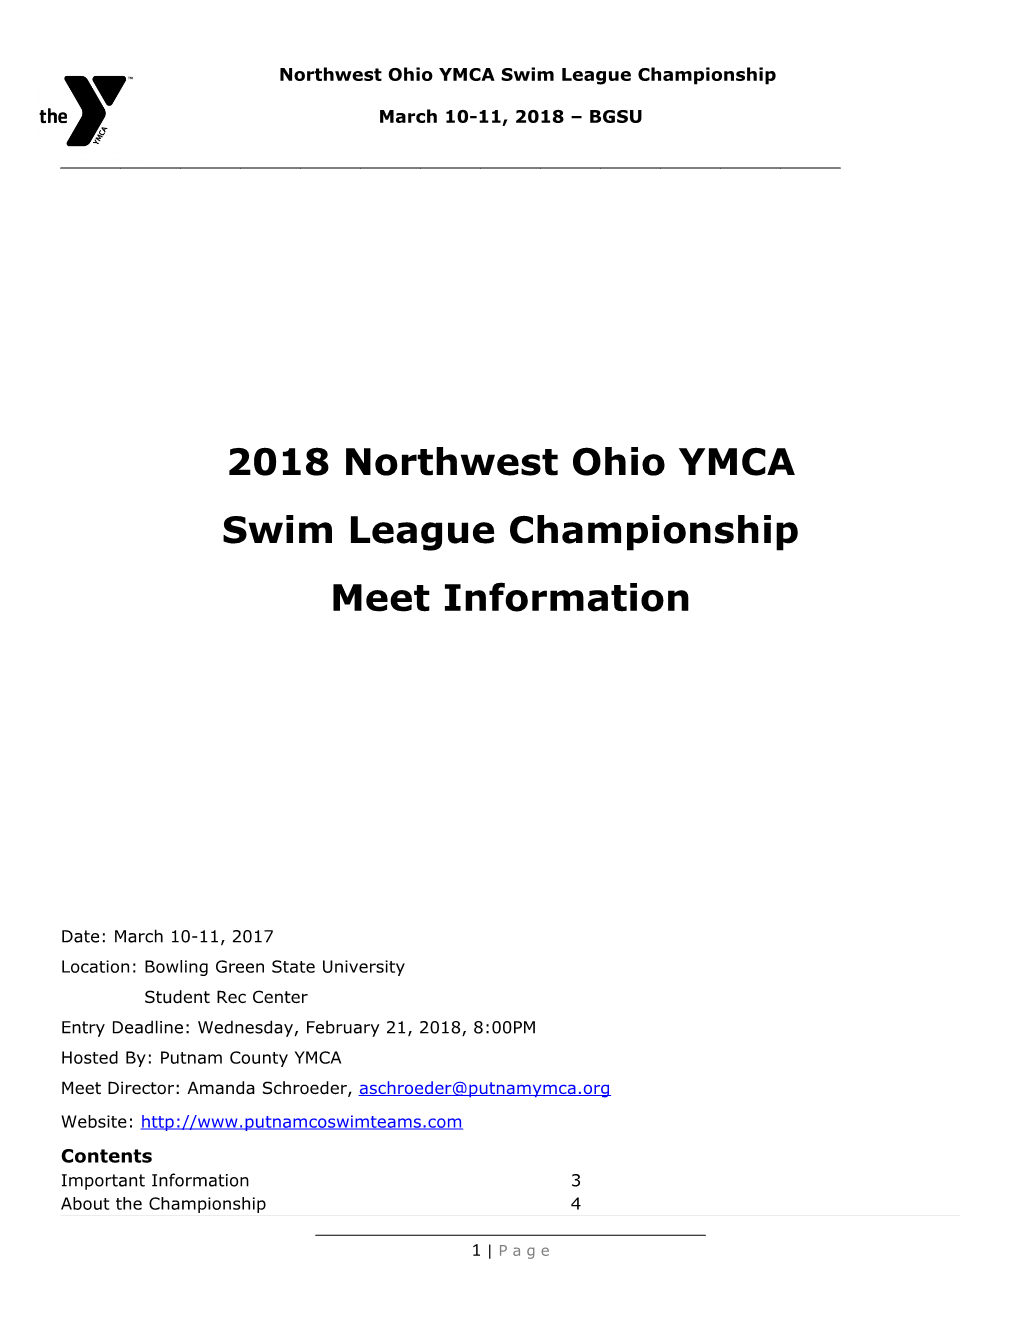 2018 Northwest Ohio YMCA